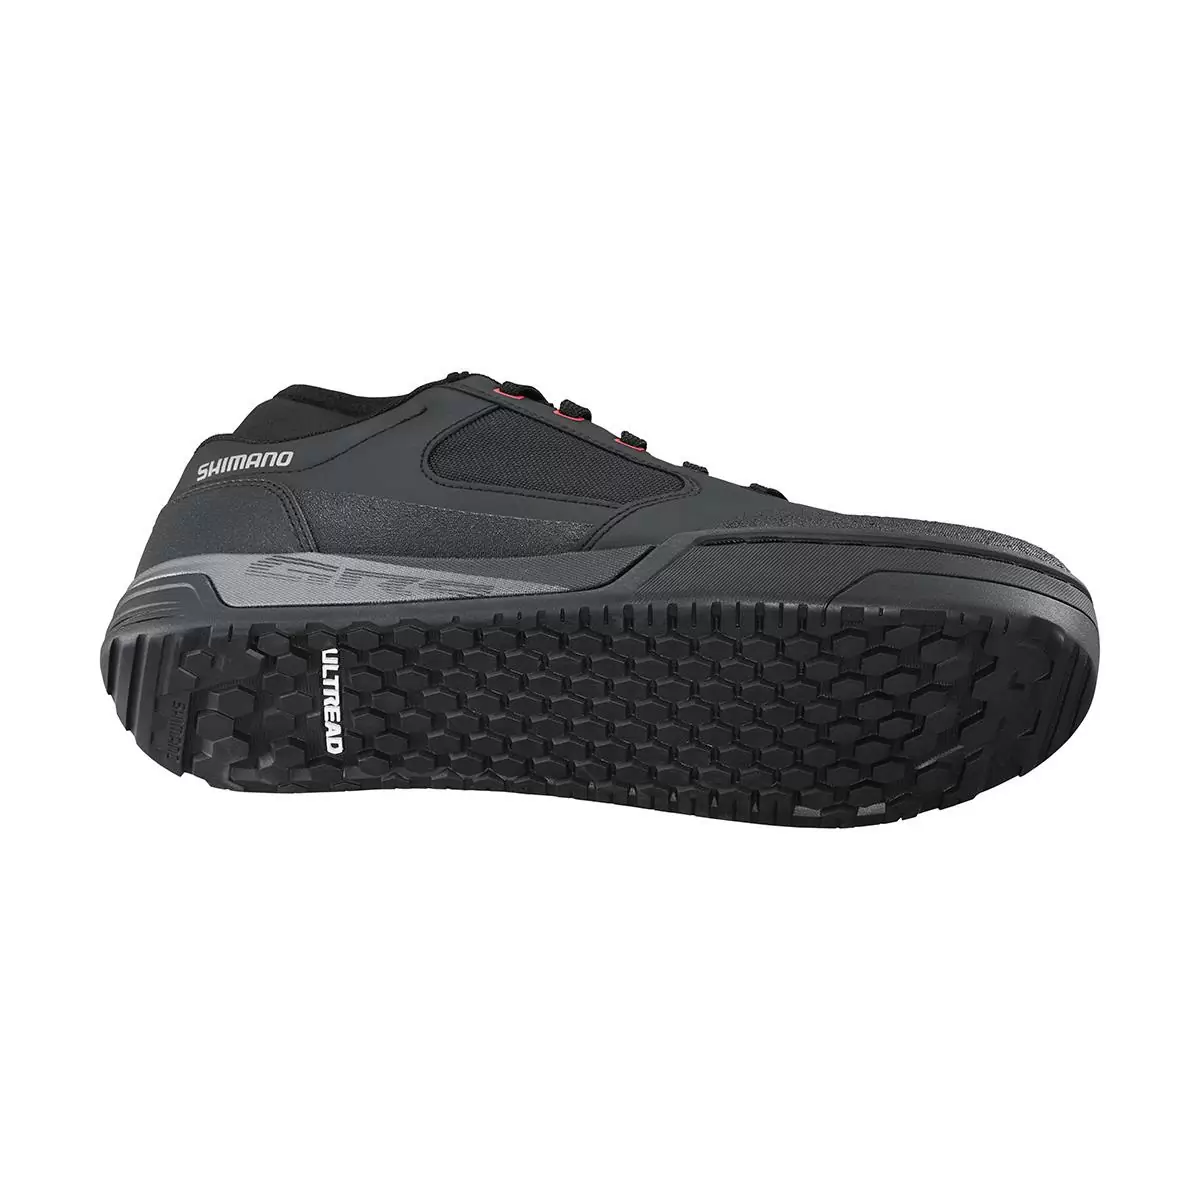 Flache MTB-Schuhe GR903 SH-GR903 schwarz Größe 38 #2